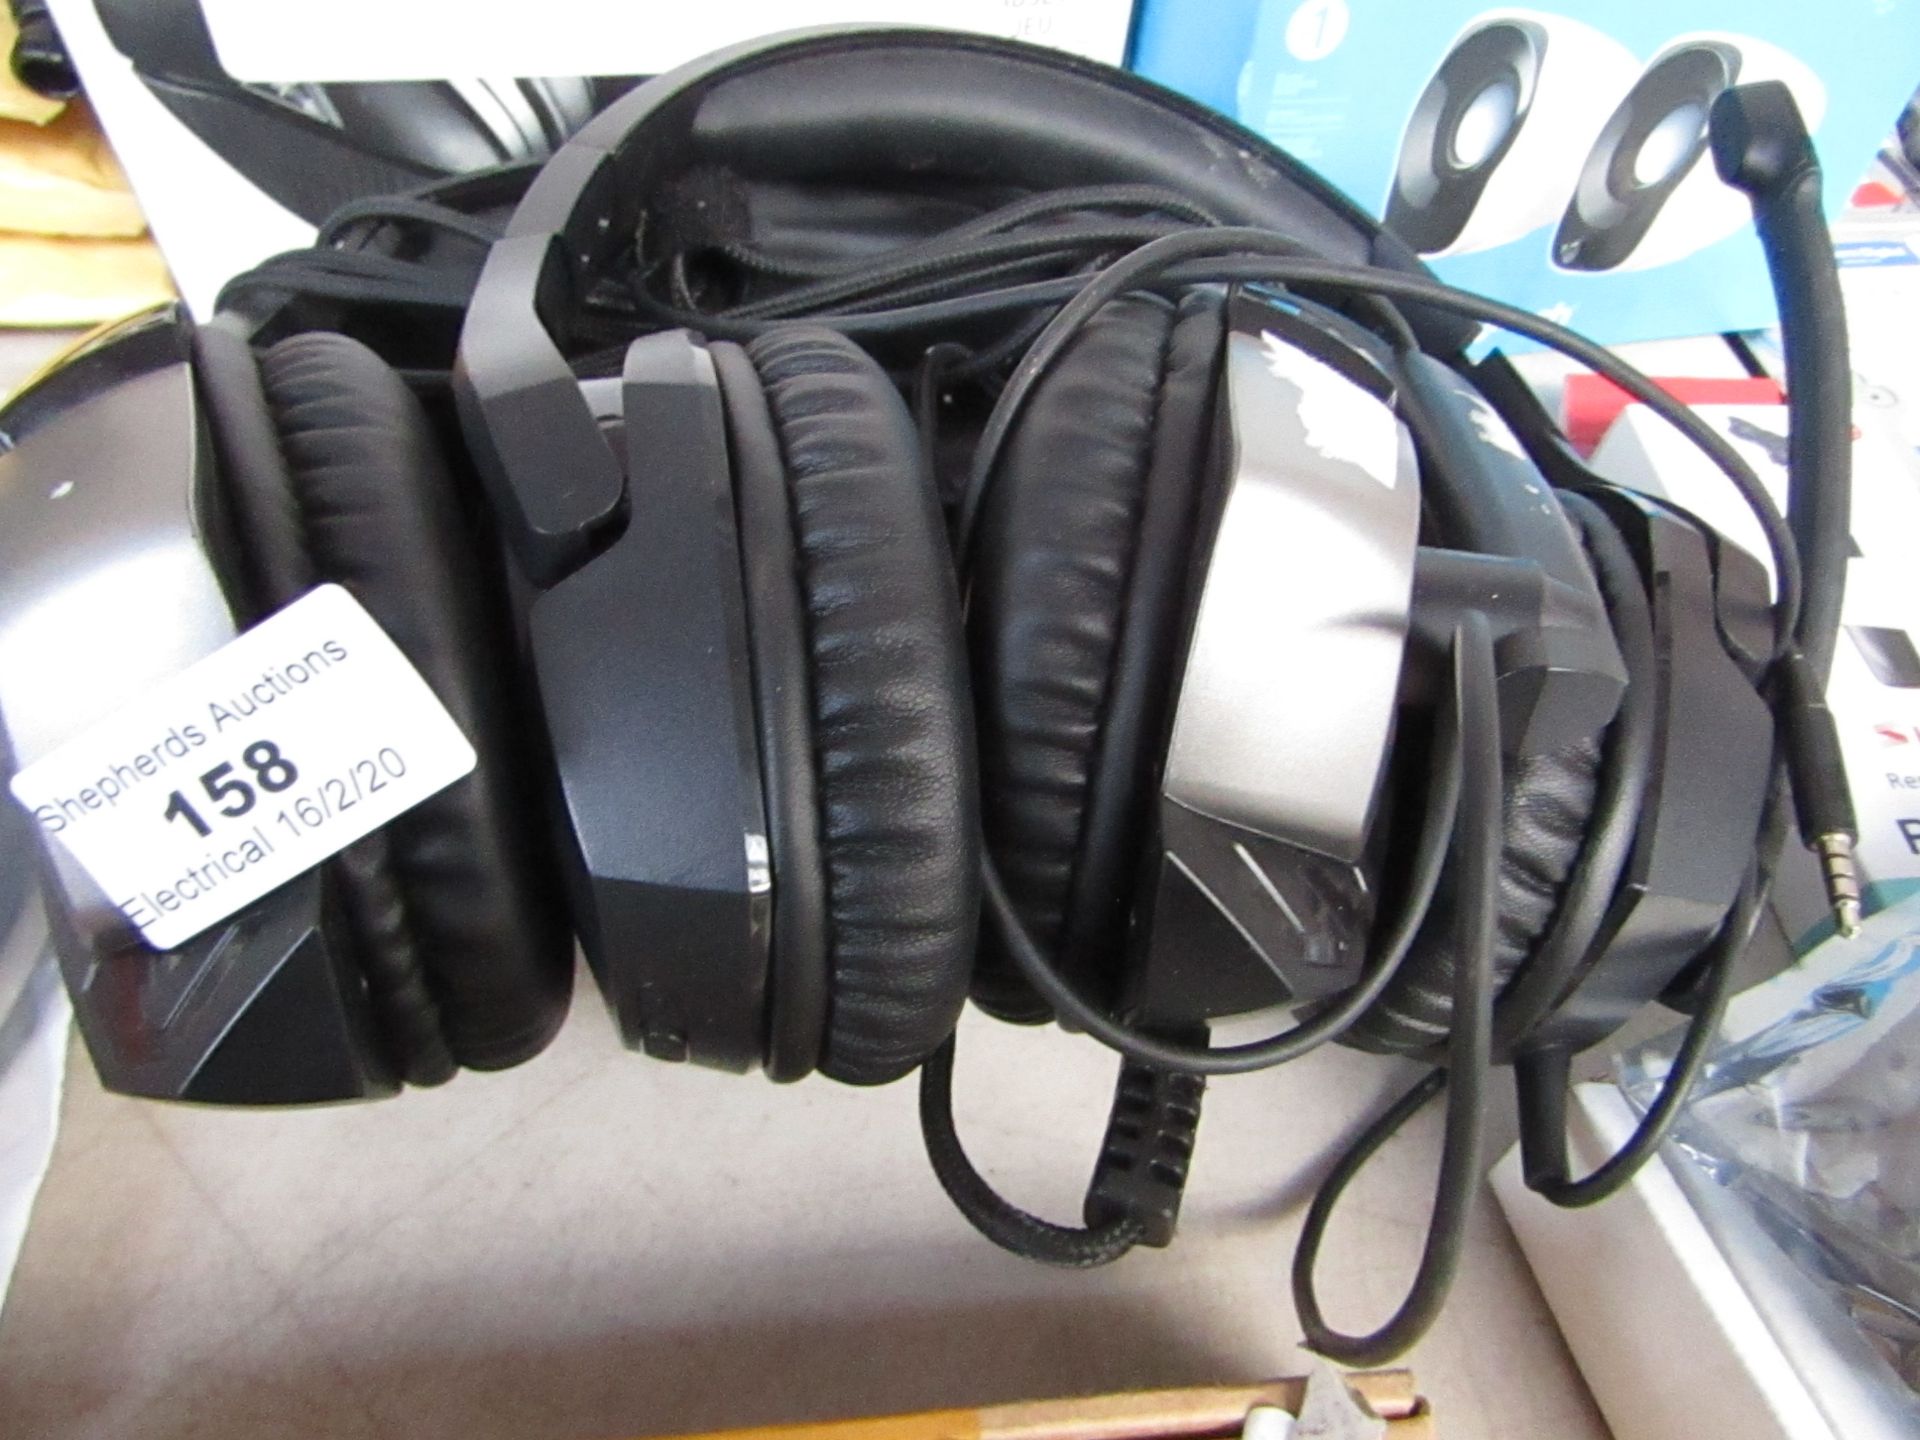 2x HeadSet's - Onikumas - gaming headset, untested & Hyper X - Cloud stinger gaming headset/Mic -